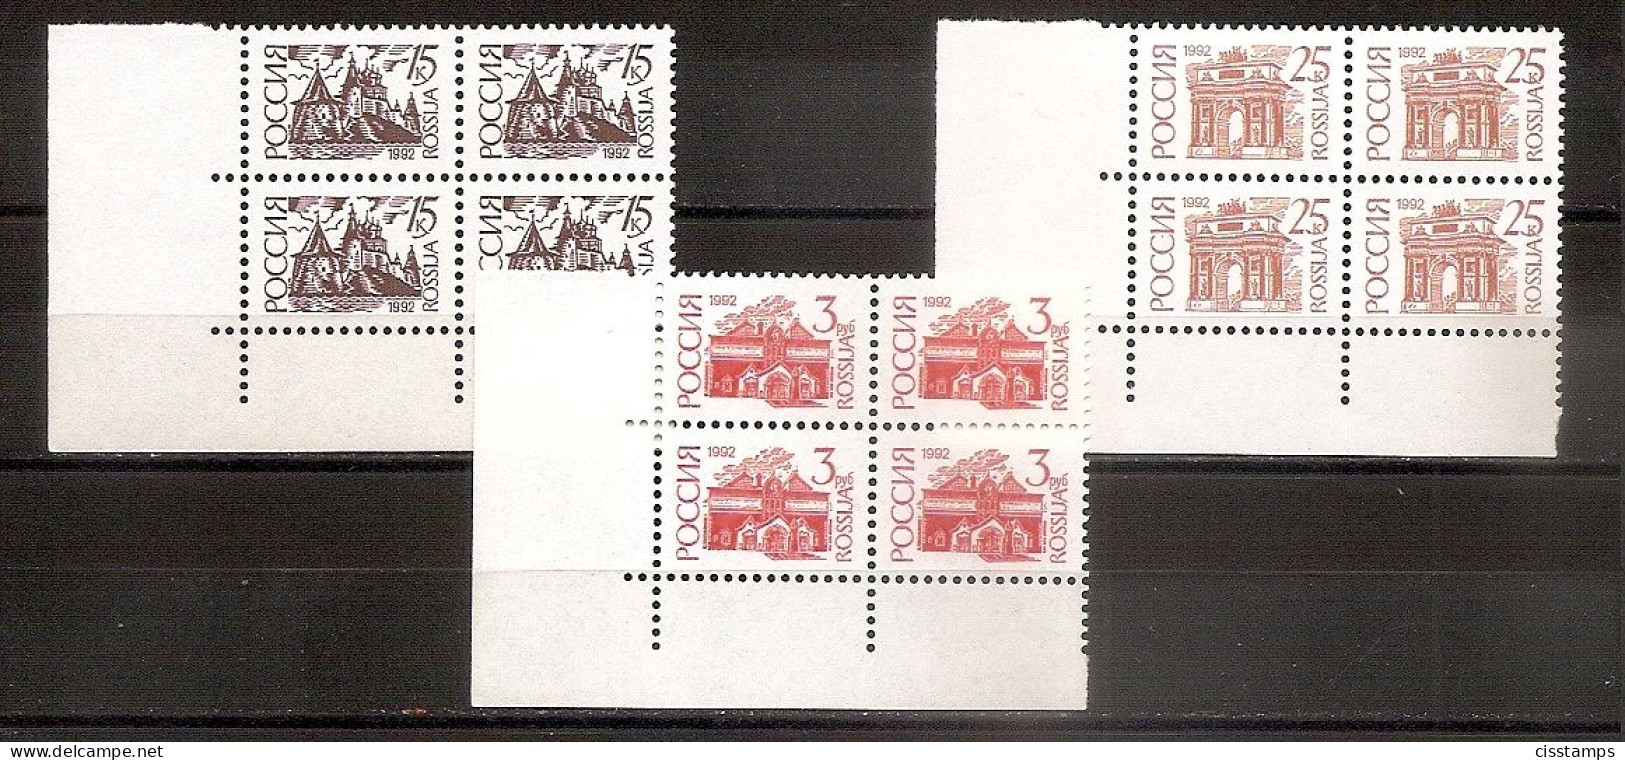 RUSSIA 1992●Definitives Ordinary Paper●11 1/2:11 3/4●●Freimarken Normalpapier●4xMi 266IAw-68IAw MNH - Unused Stamps